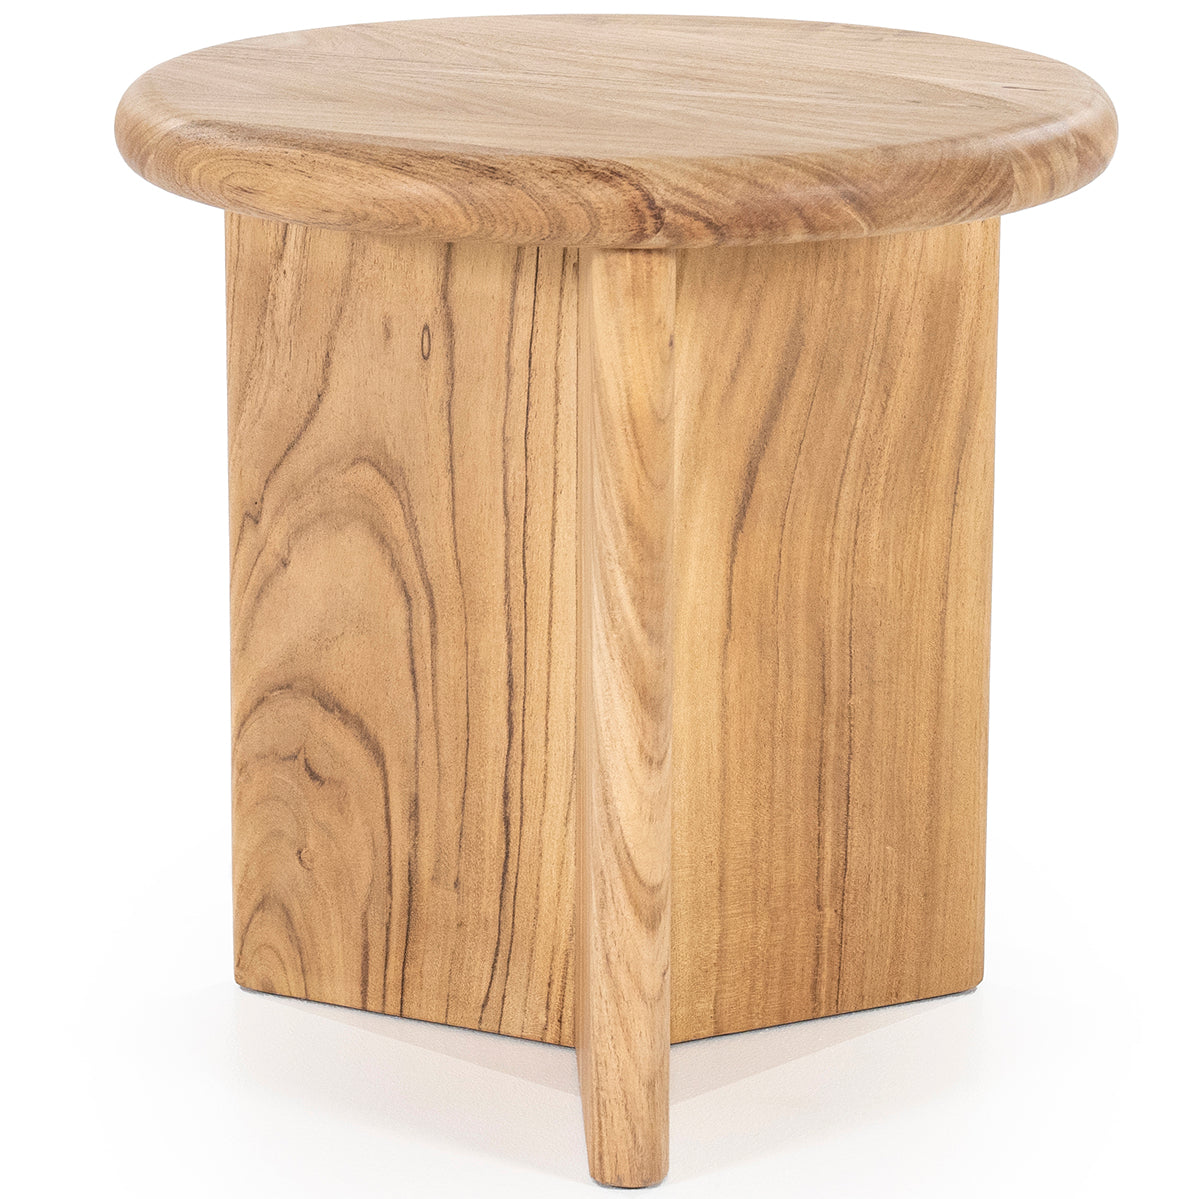 Leoti Acacia Wood Coffee Table